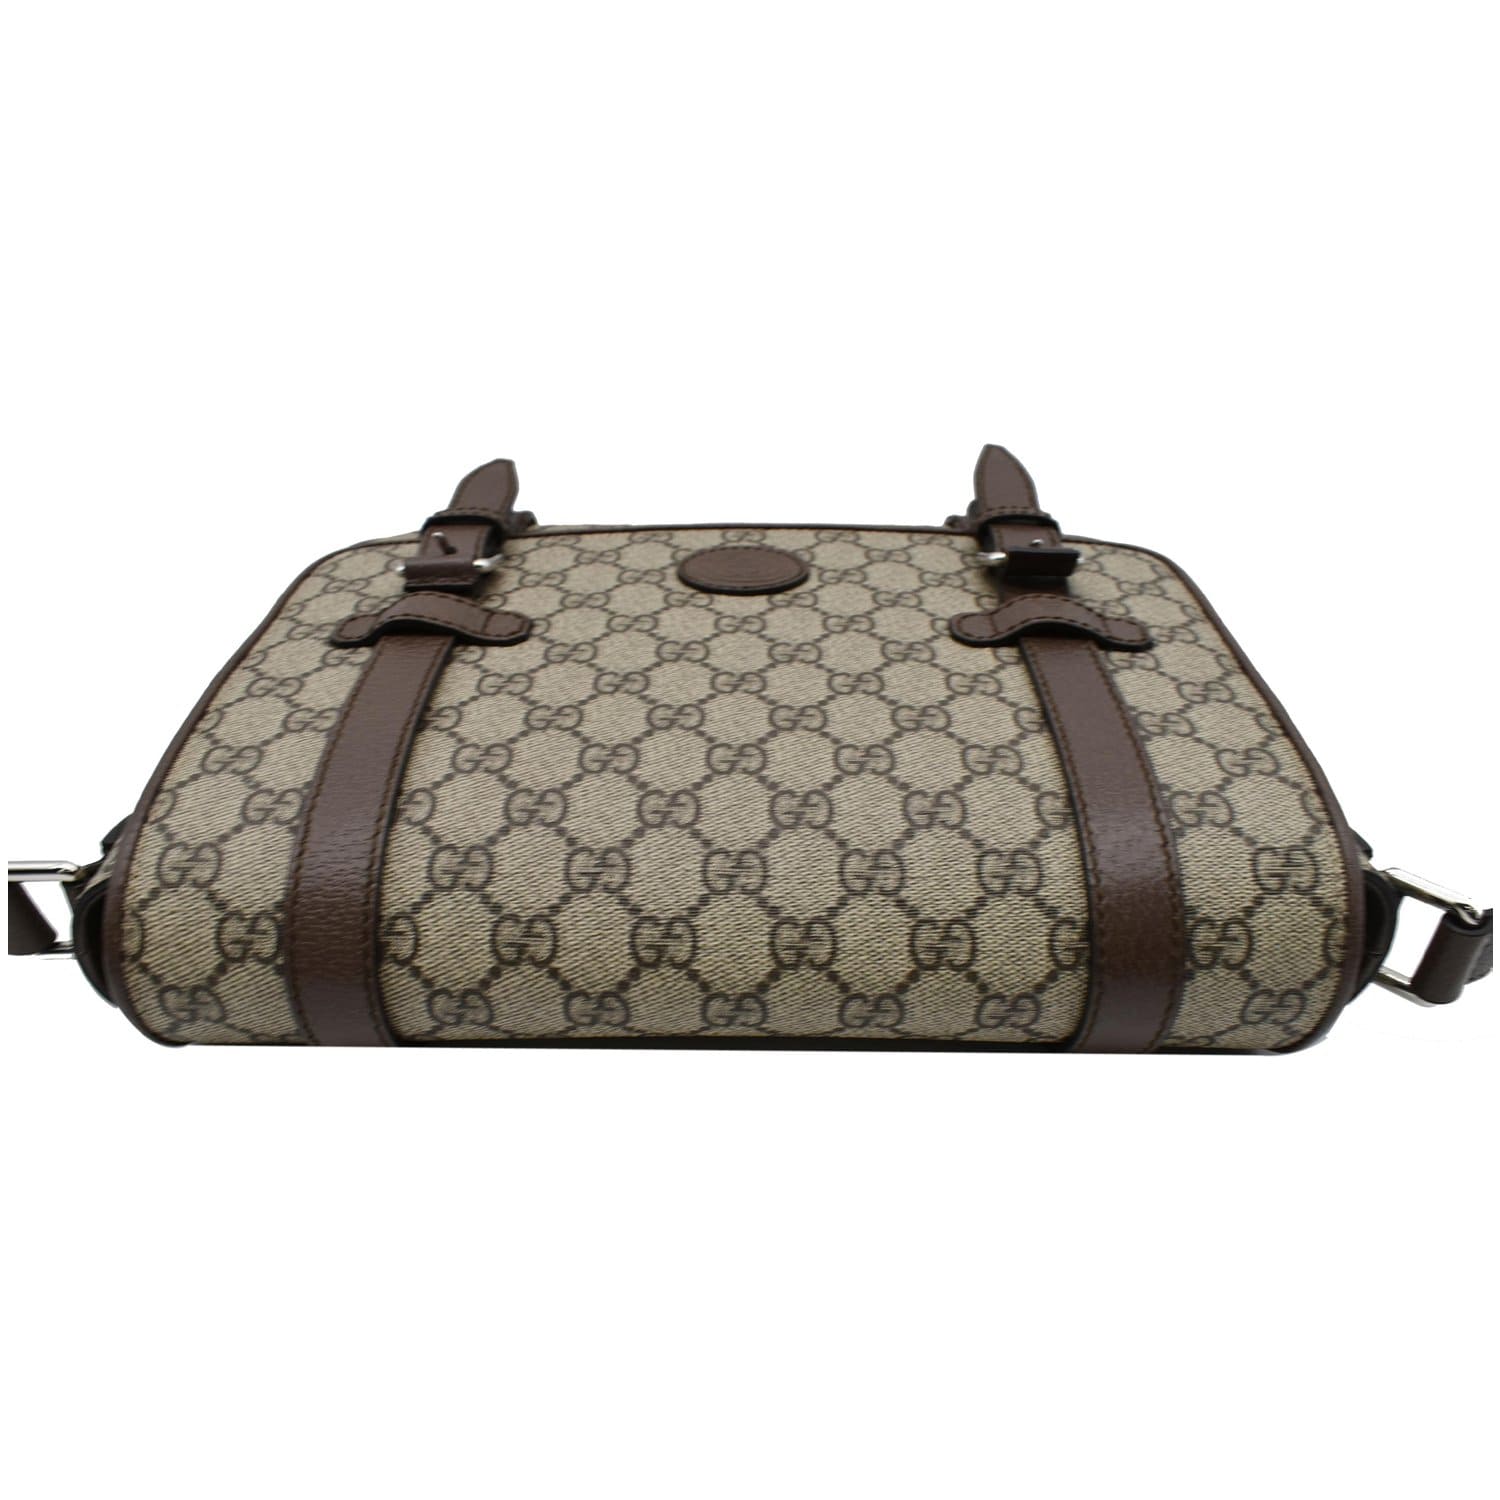 Gucci Web Gg Supreme Laptop Bag In Beige, ModeSens